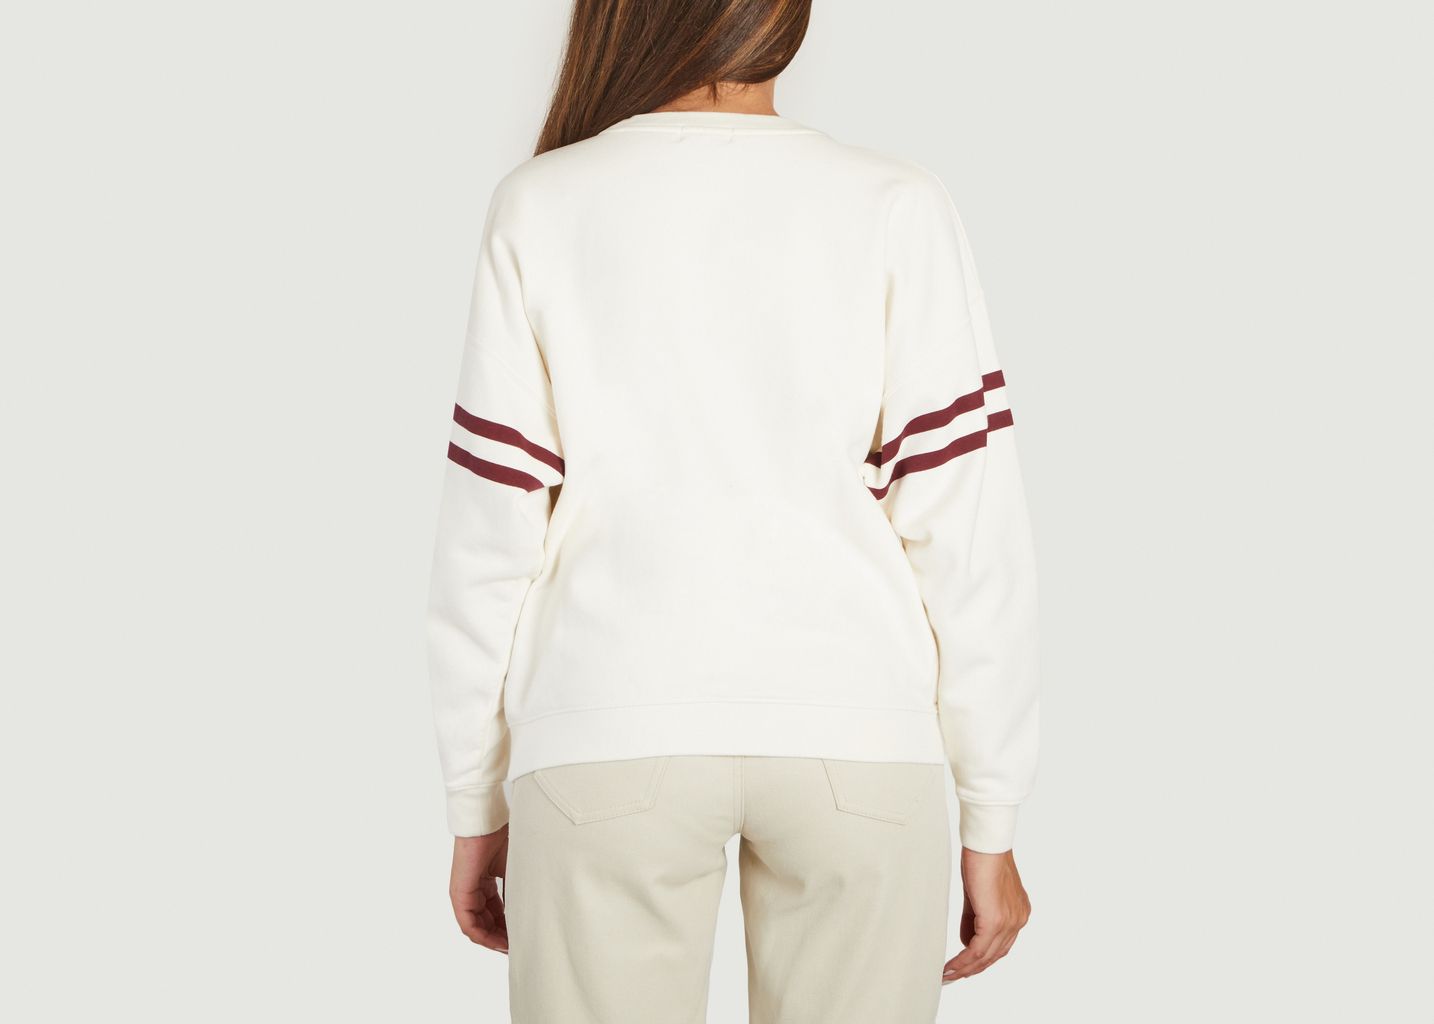 Sweatshirt aus Premium-Molton French Touch - French Disorder